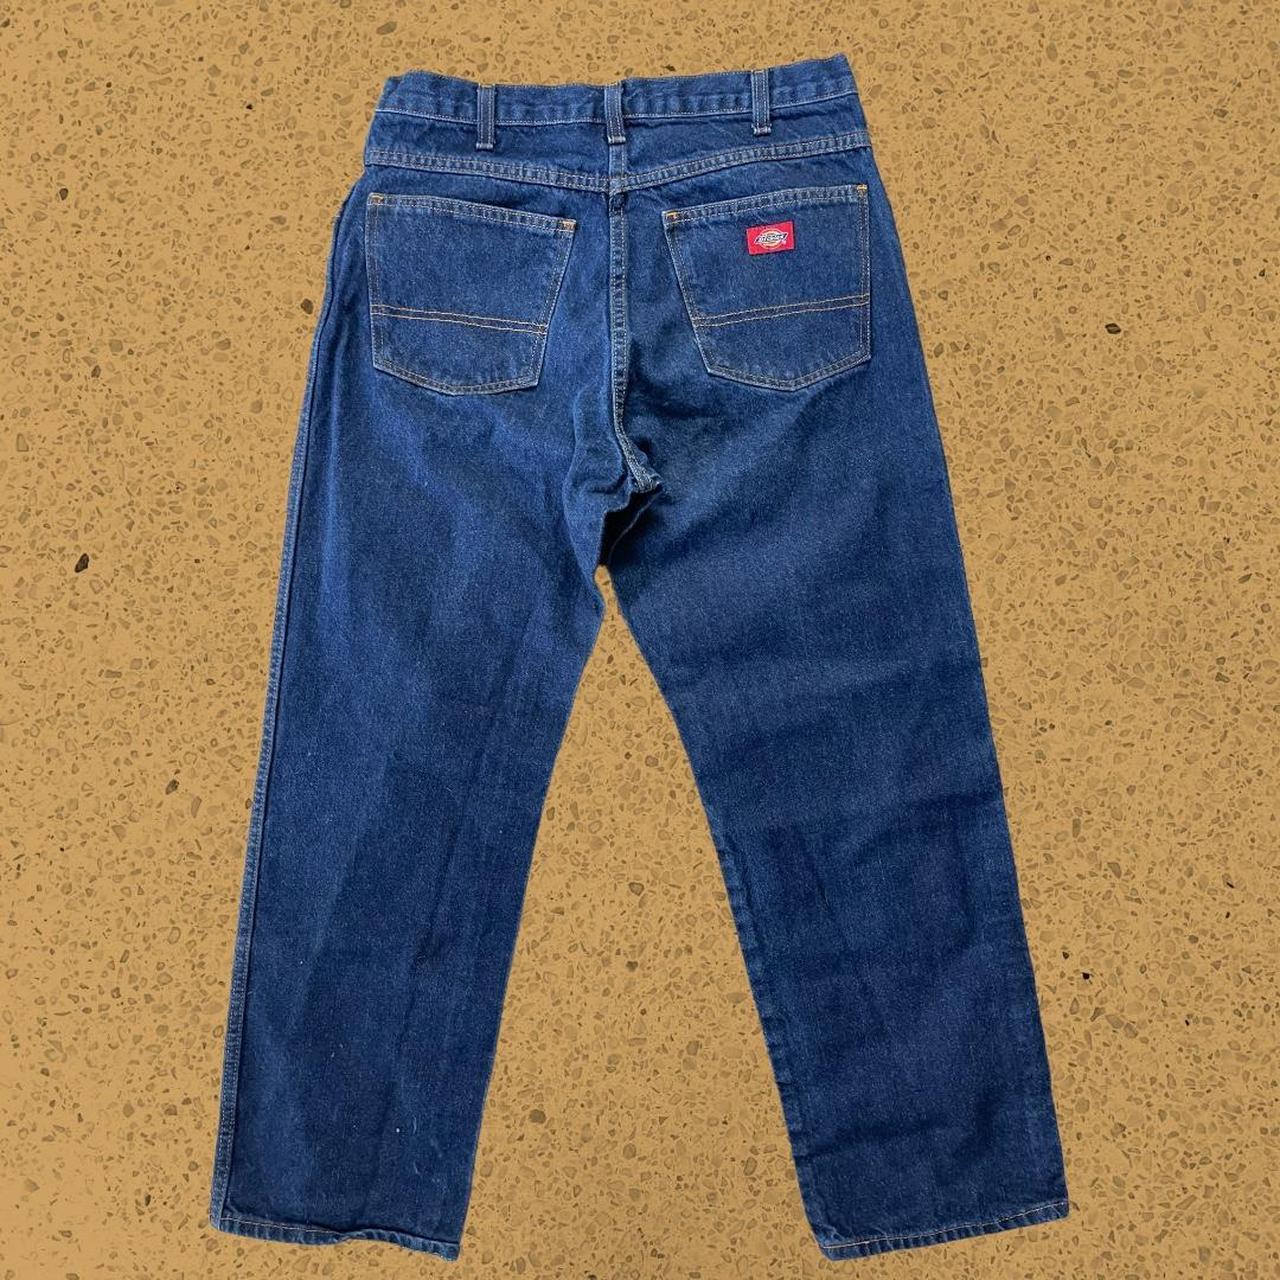 Product Image 1 - Dickies work pants denim jeans
Mens